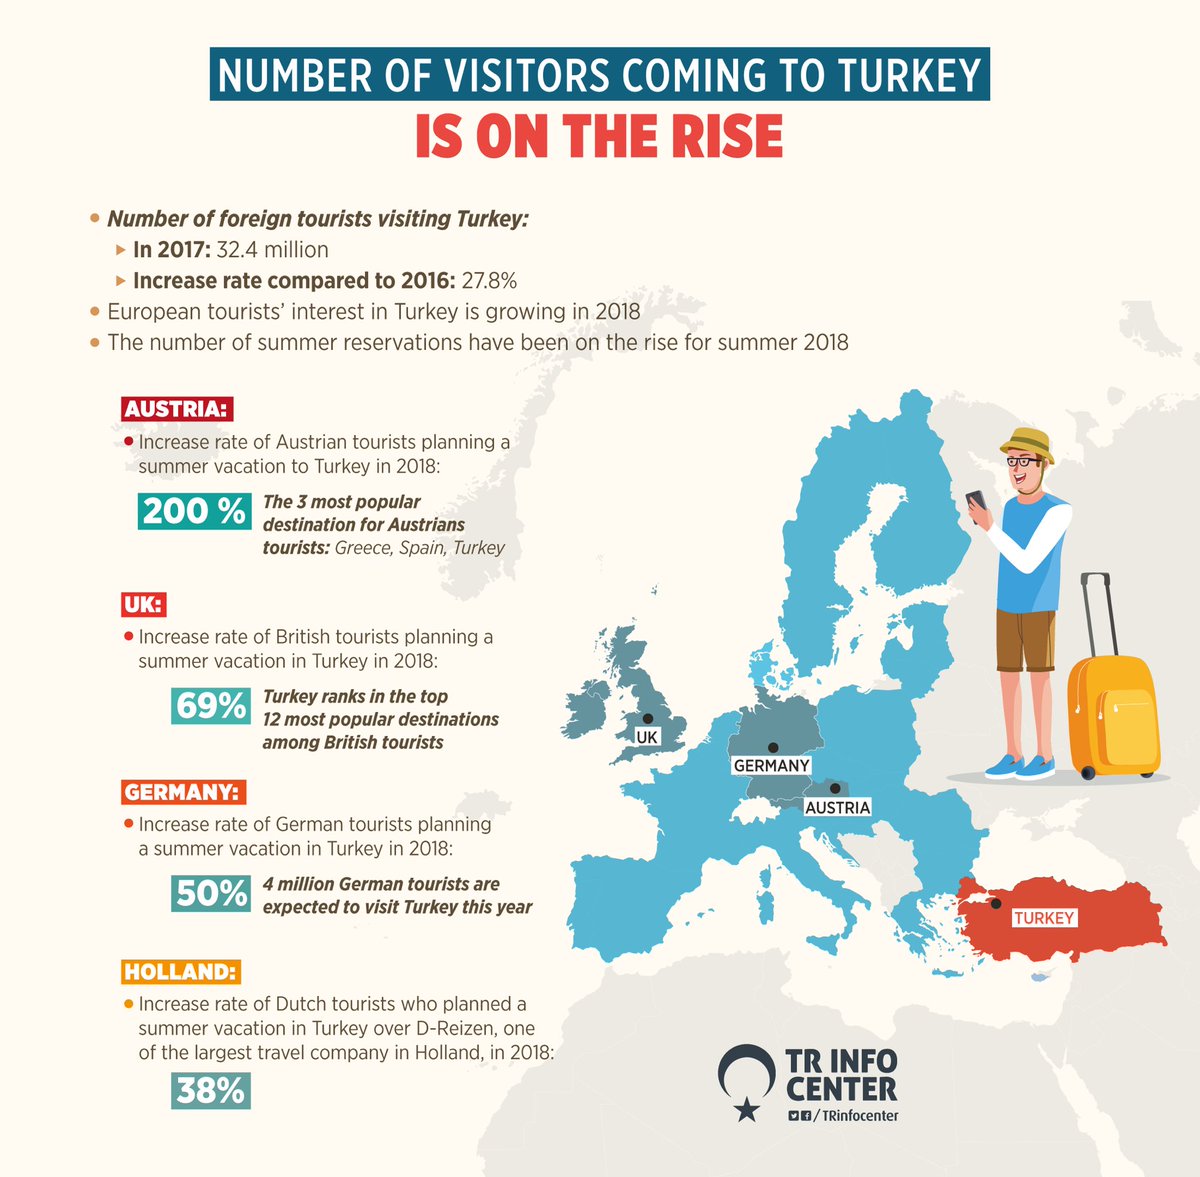 European tourists’ interest in Turkey is growing in 2018